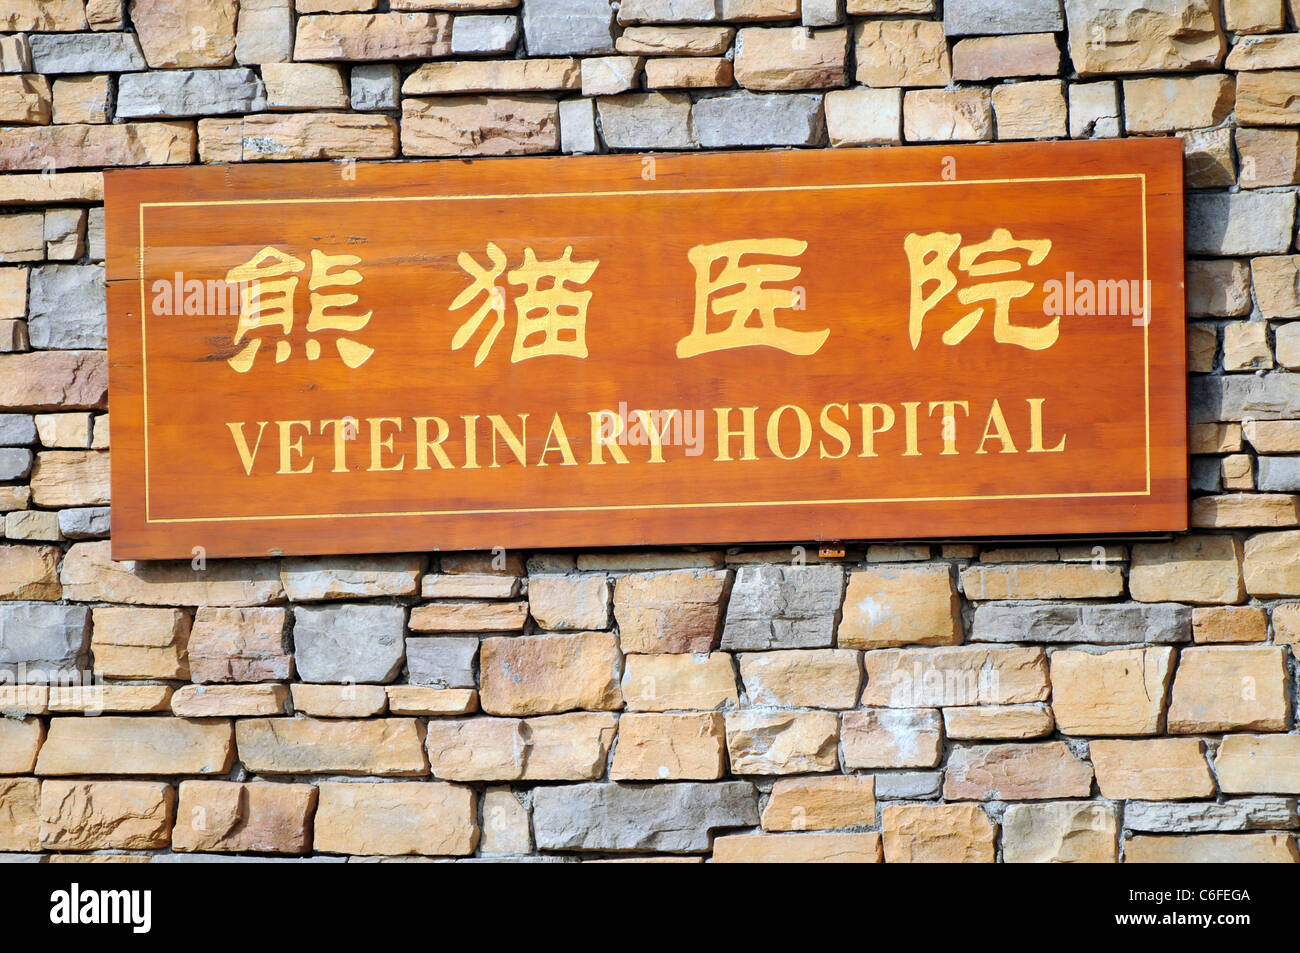 Veterinary Hospital sign at The Chengdu Research Base of Giant Panda Breeding, Chengdu, China Stock Photo